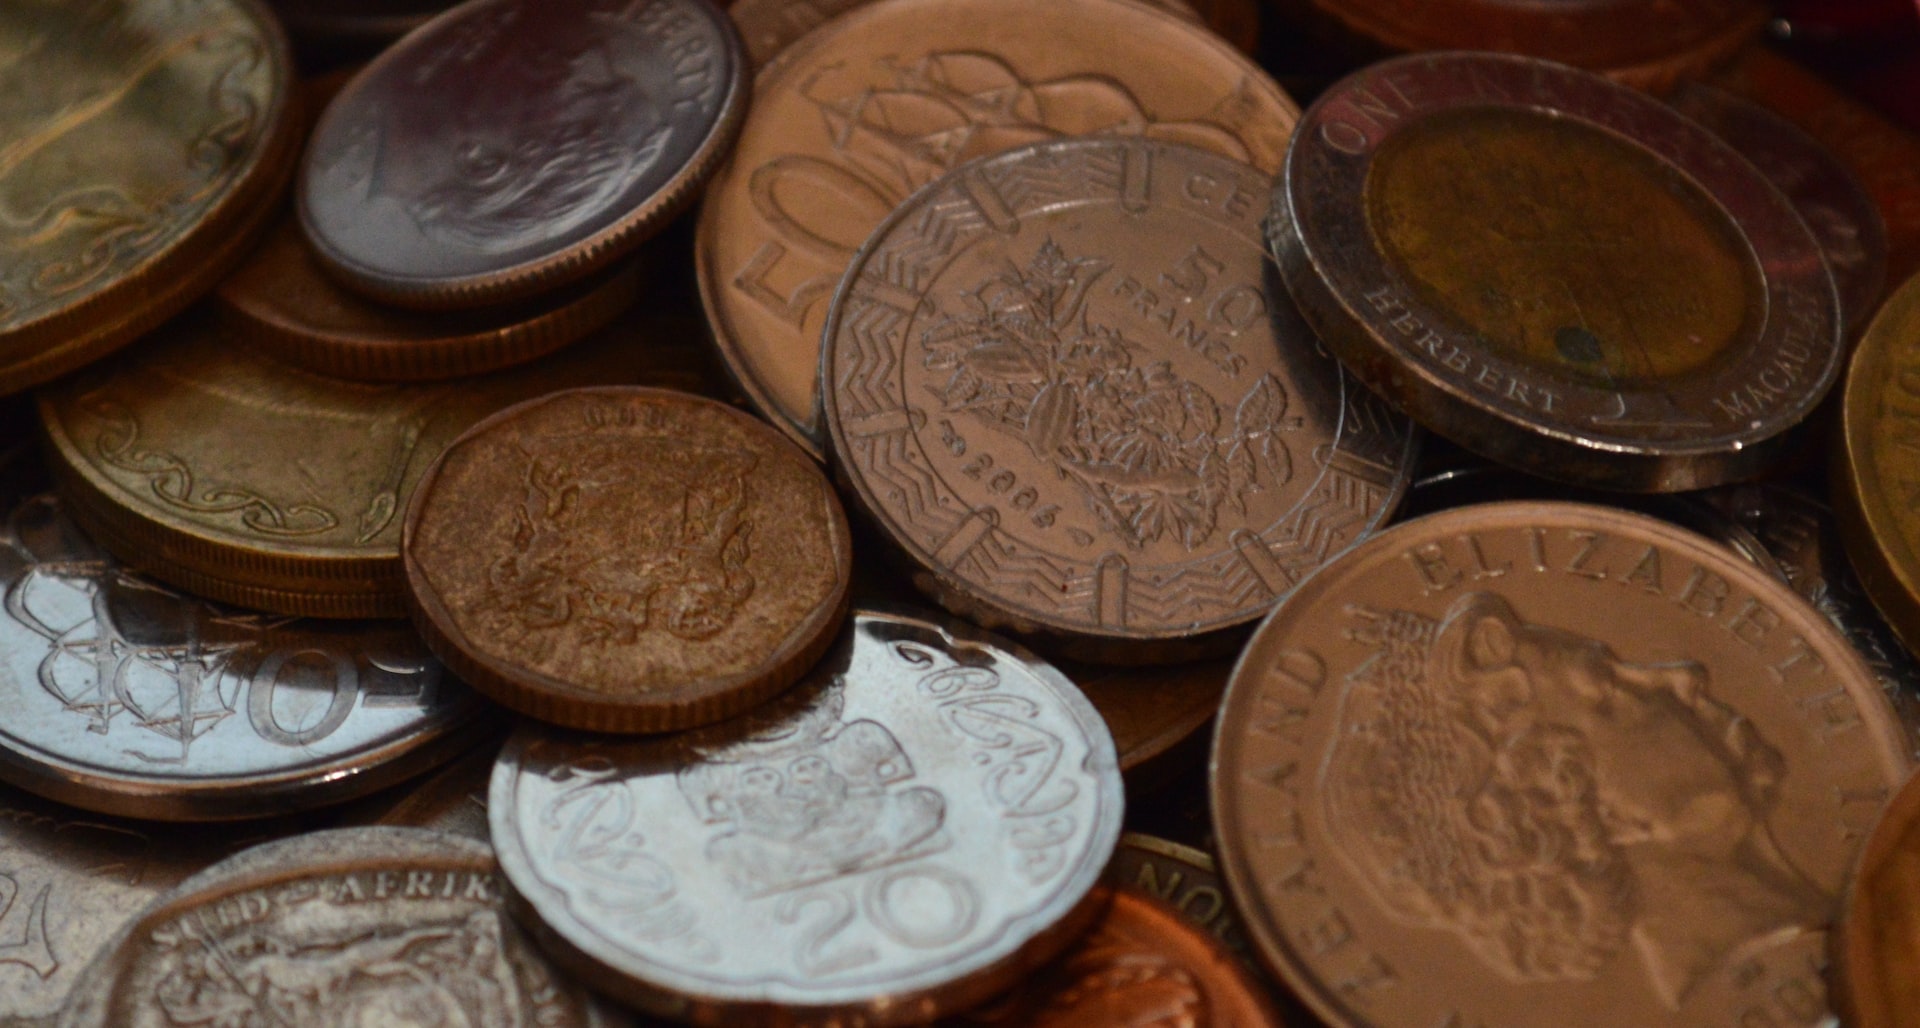 Rare Coins for Investors